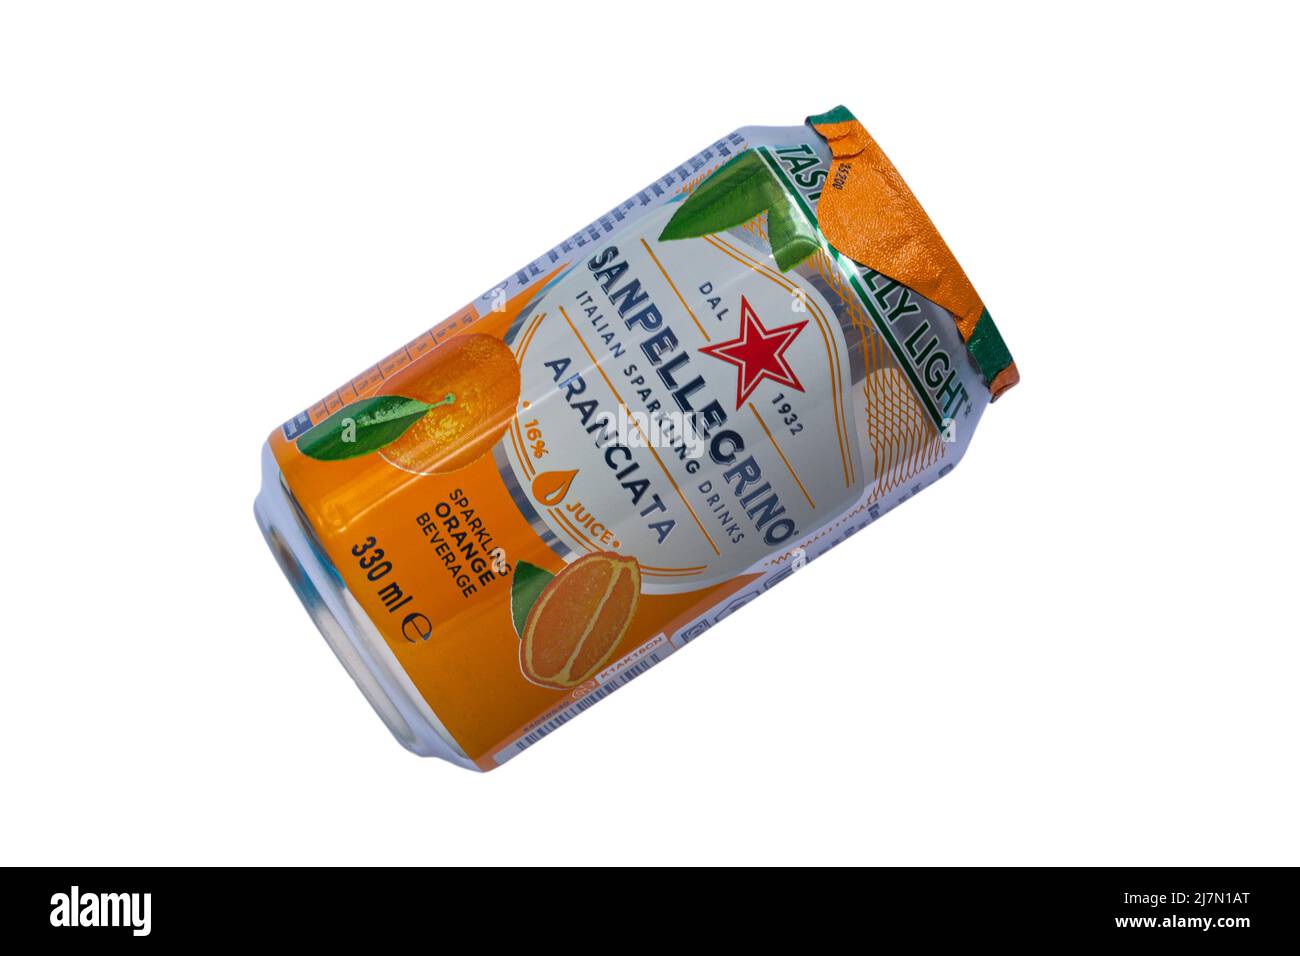 Can of Sanpellegrino aranciata drink isolated on white background - sparkling orange beverage, Italian sparkling drinks Stock Photo